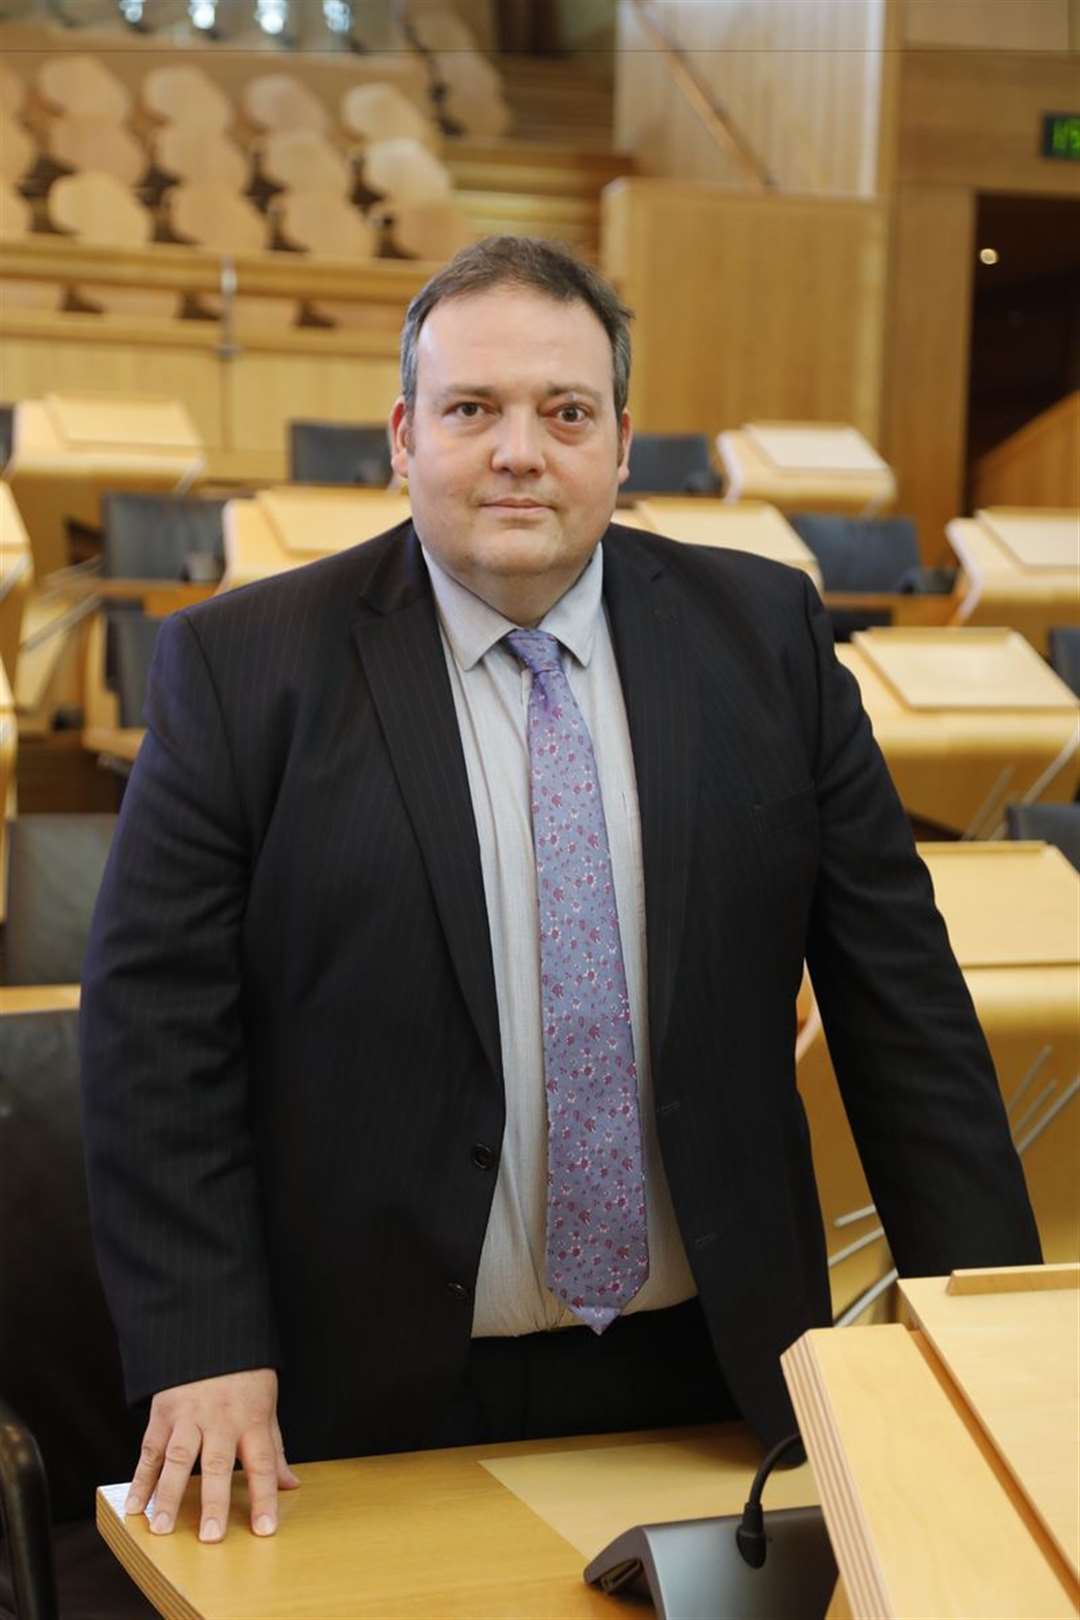 Jamie Halcro Johnston MSP. Picture: Andrew Cowan/Scottish Parliament